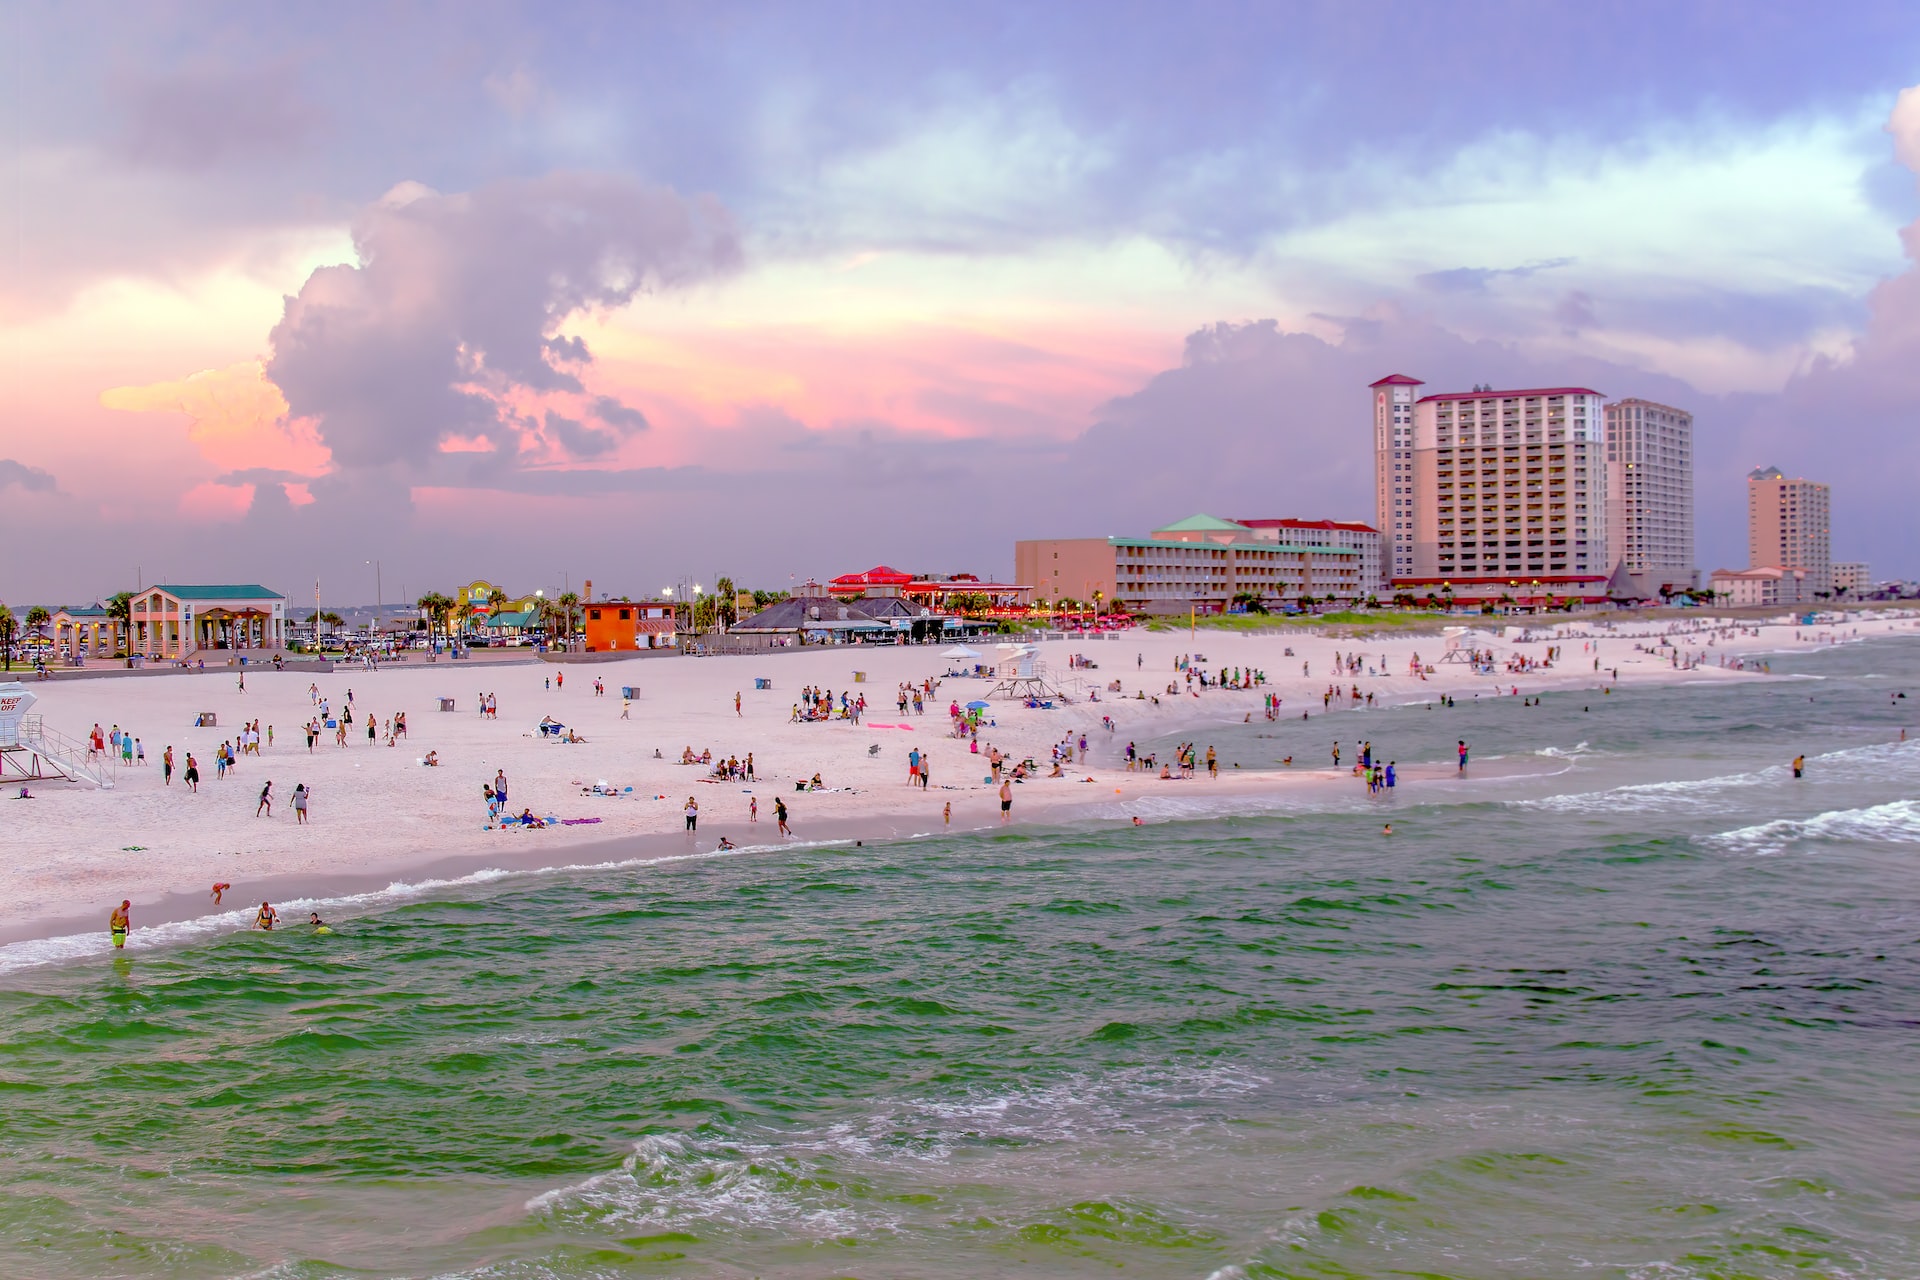 People along the beach of Pensacola, Florida, during sunset.